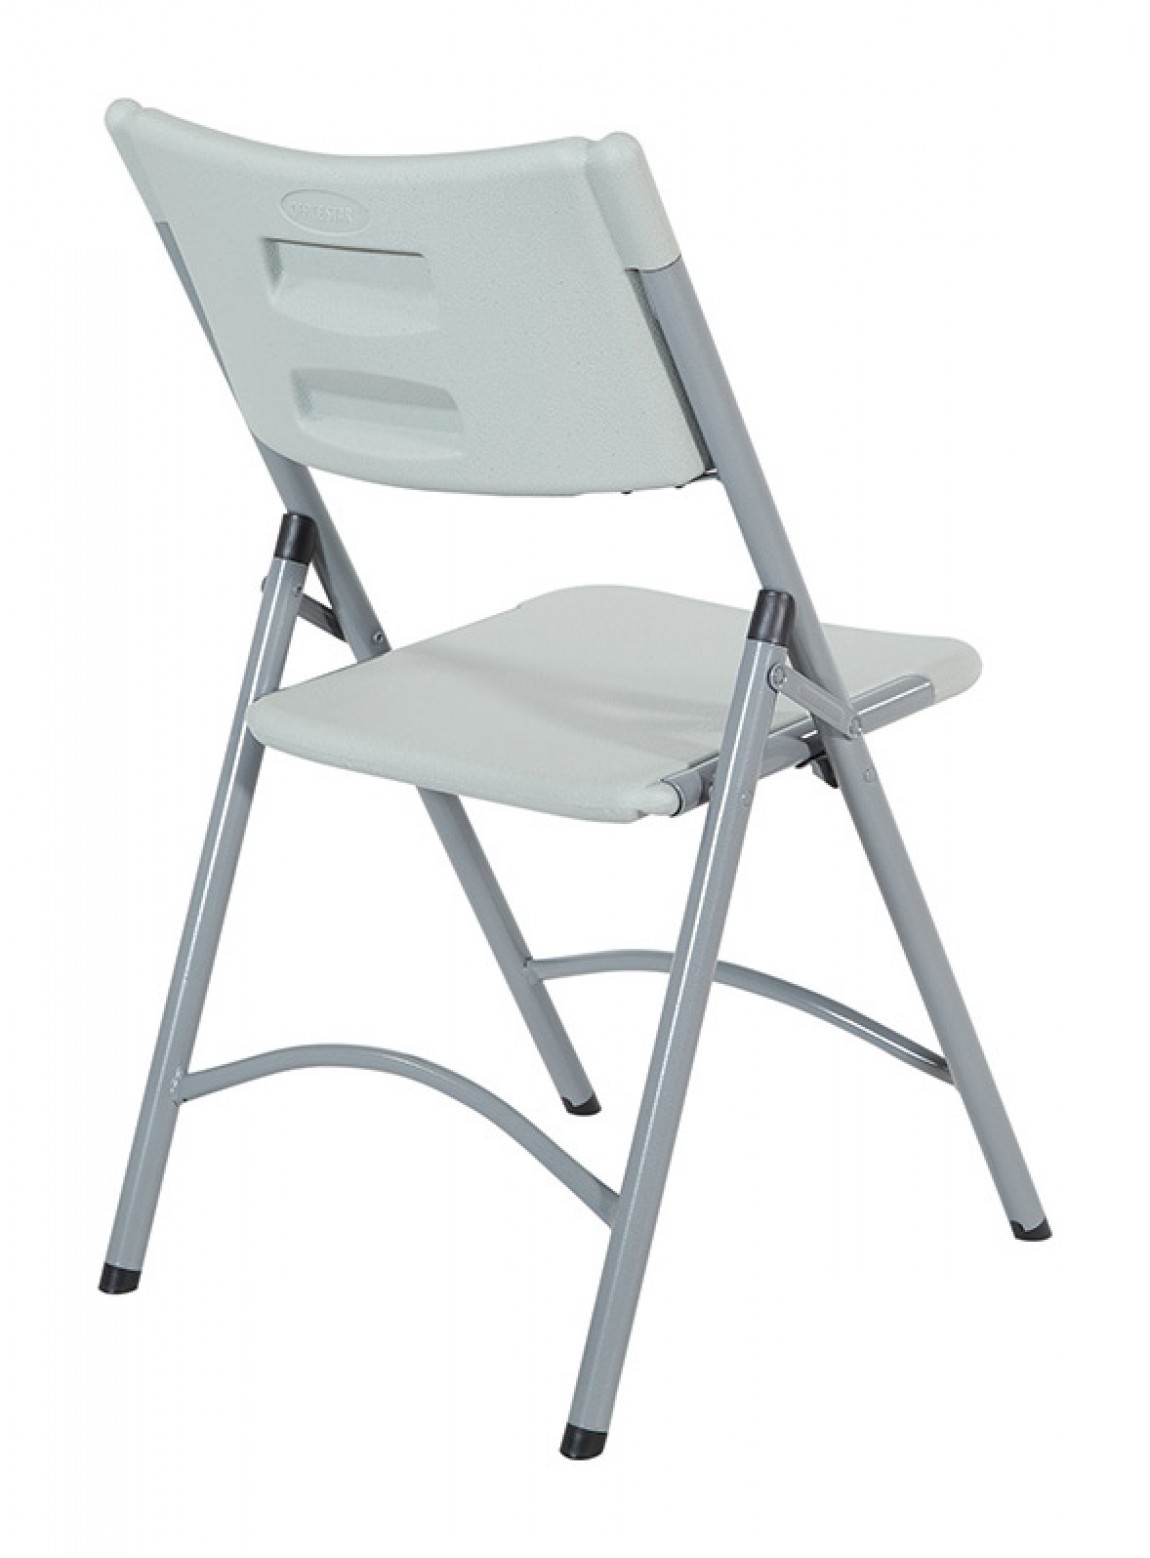 Resin Folding Chair - 4 Pack